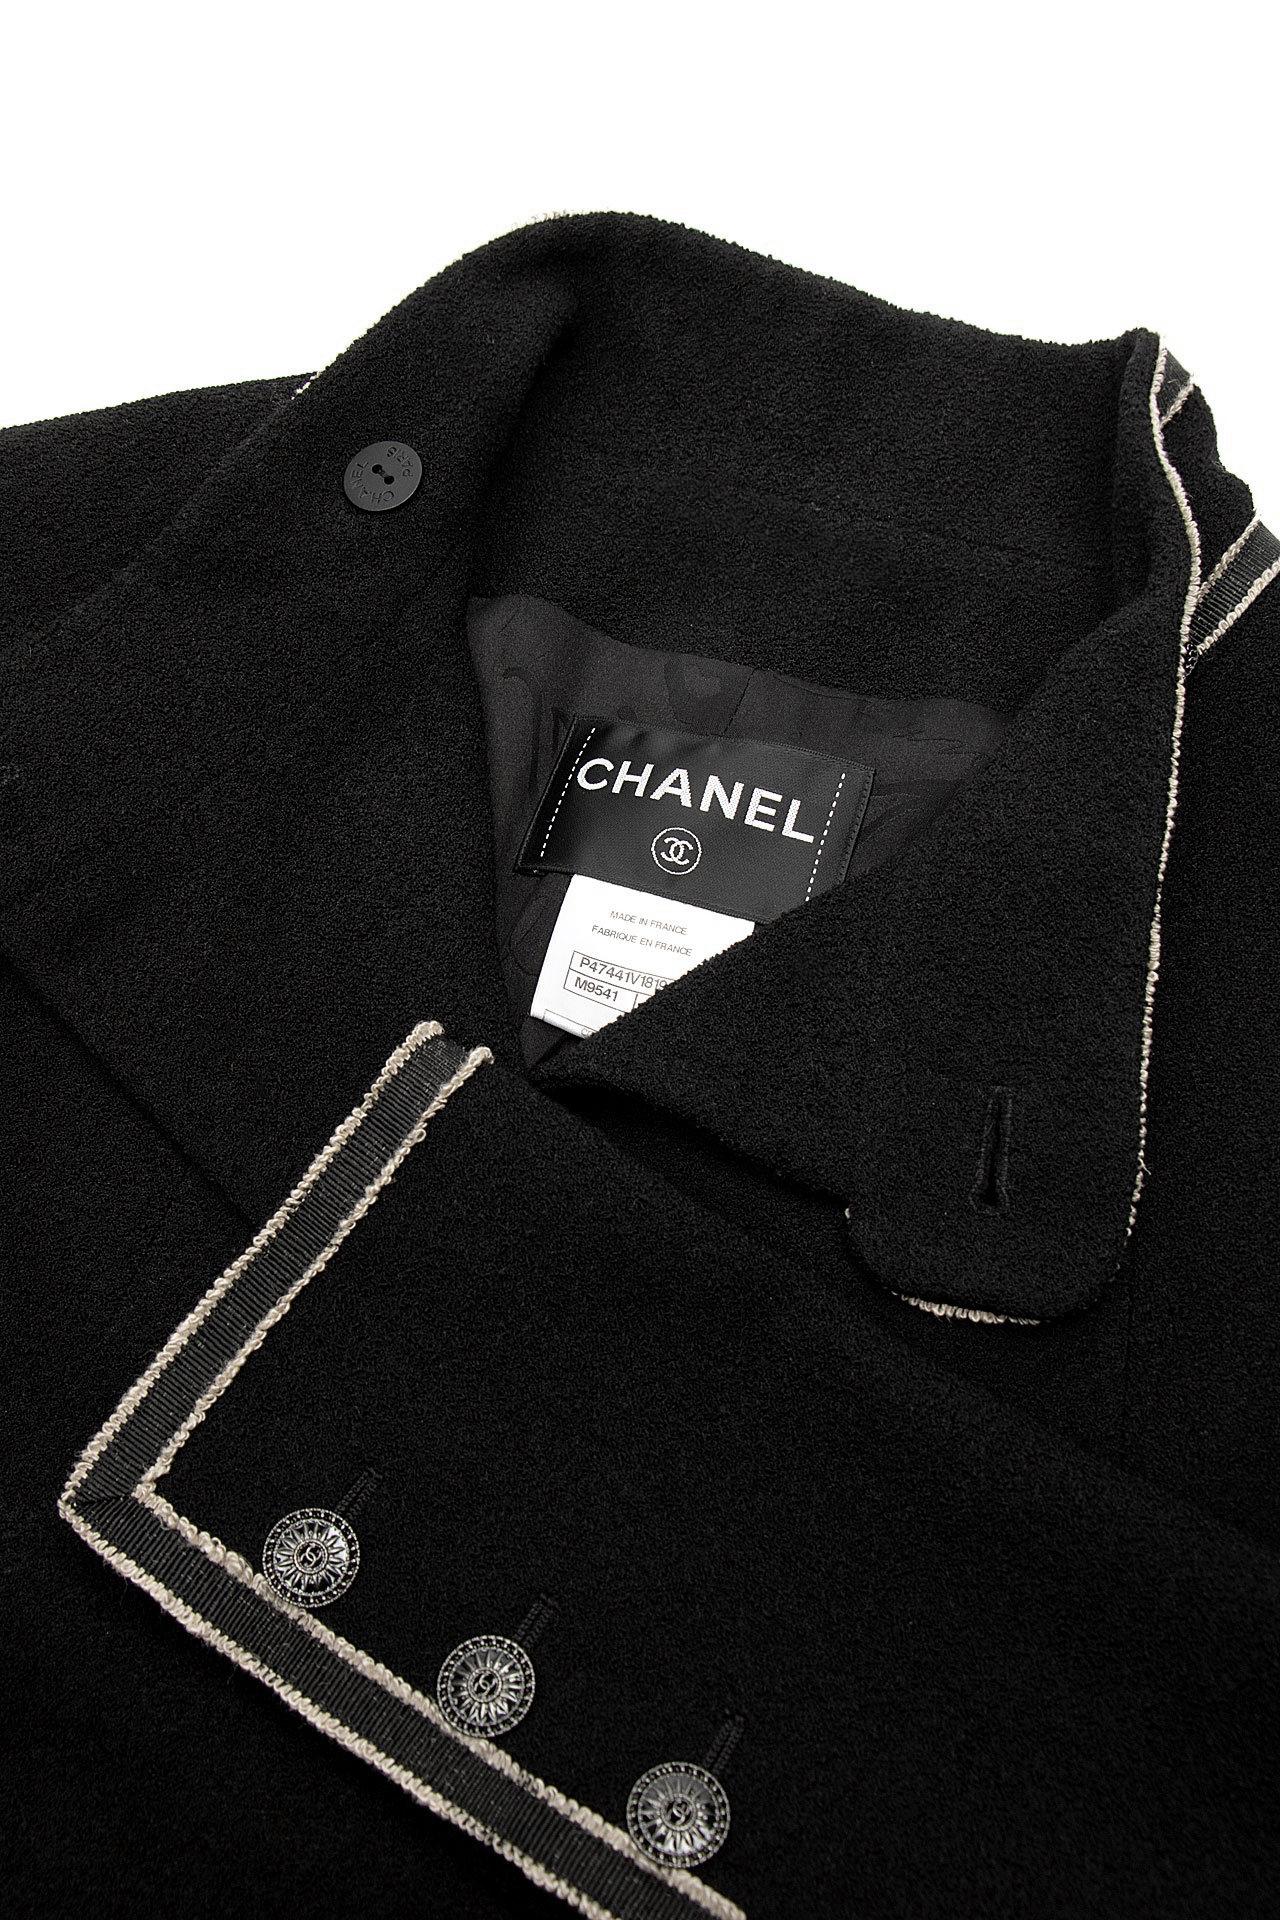 Chanel Paris / Singapore Runway Black Tweed Coat 5